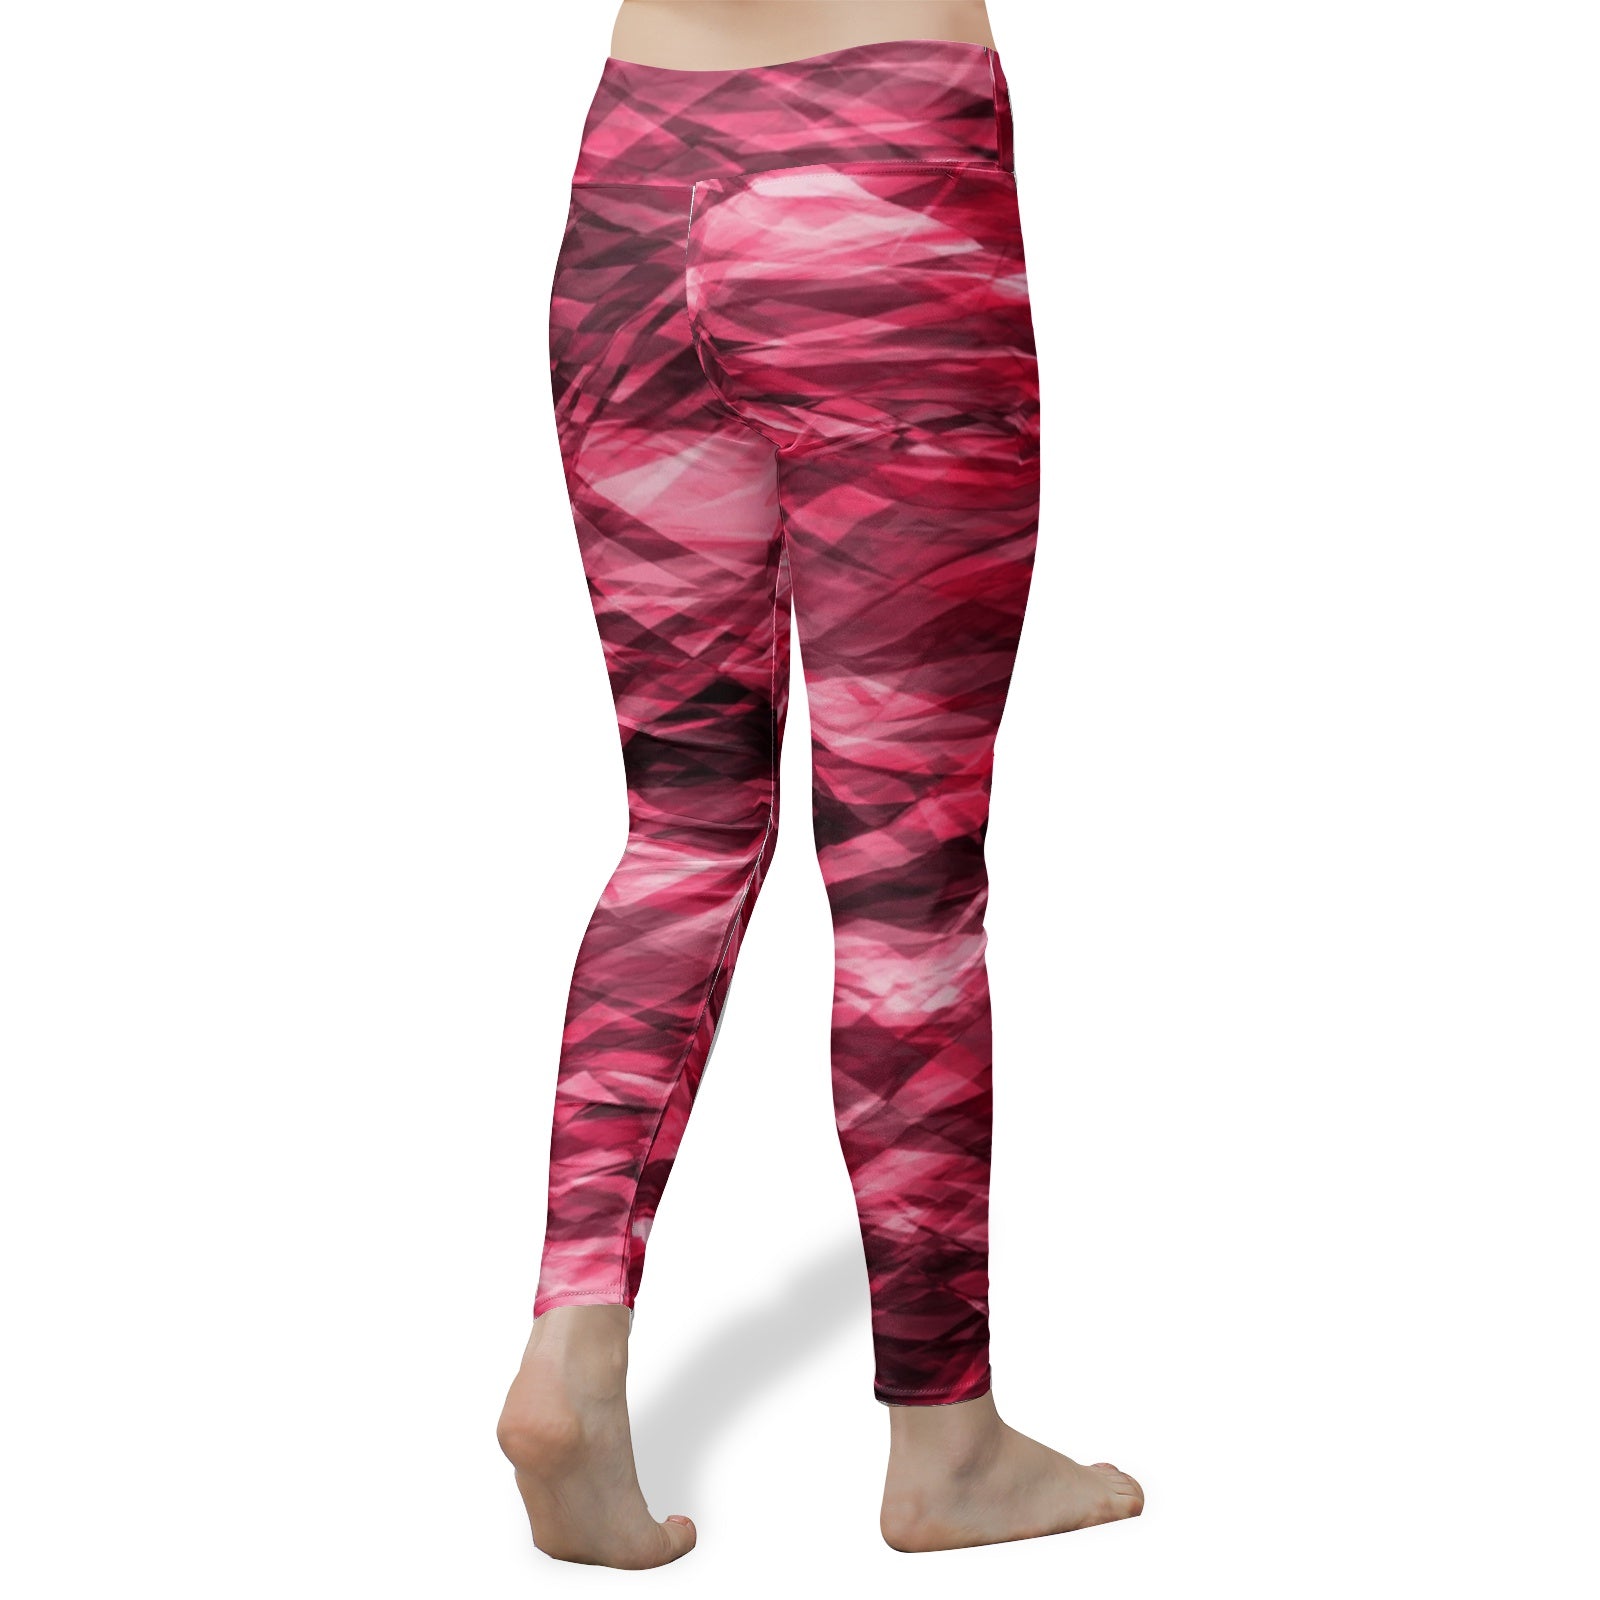 Psychedelic Dramatic Pink Women's High Waist Yoga Leggings - DromedarShop.com Online Boutique